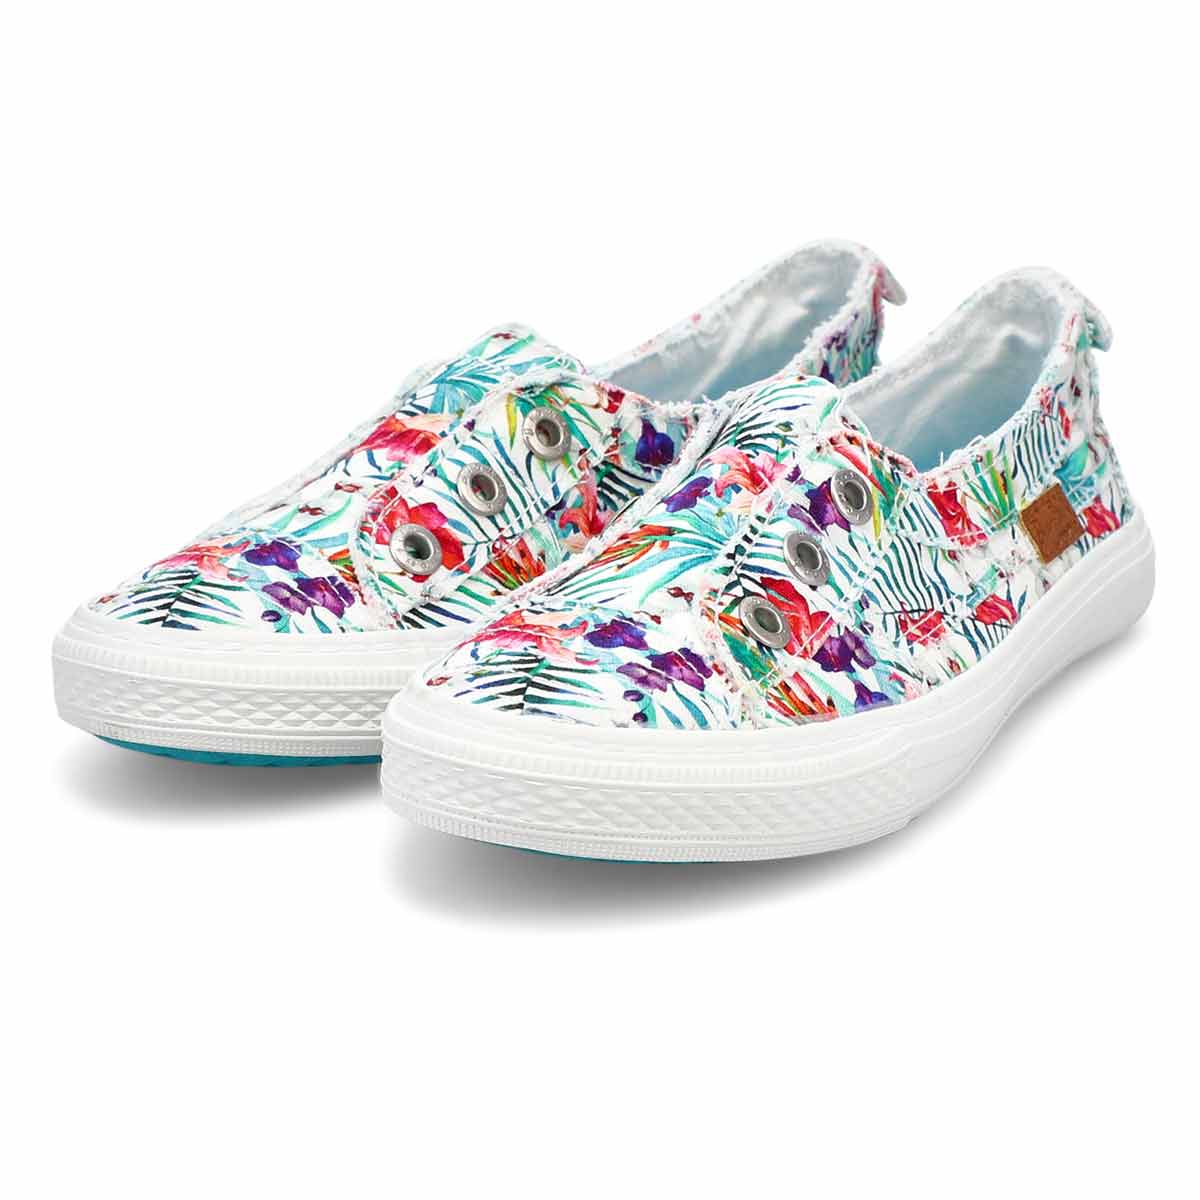 Blowfish Malibu Women's Aussie Sneaker - Whit | SoftMoc.com